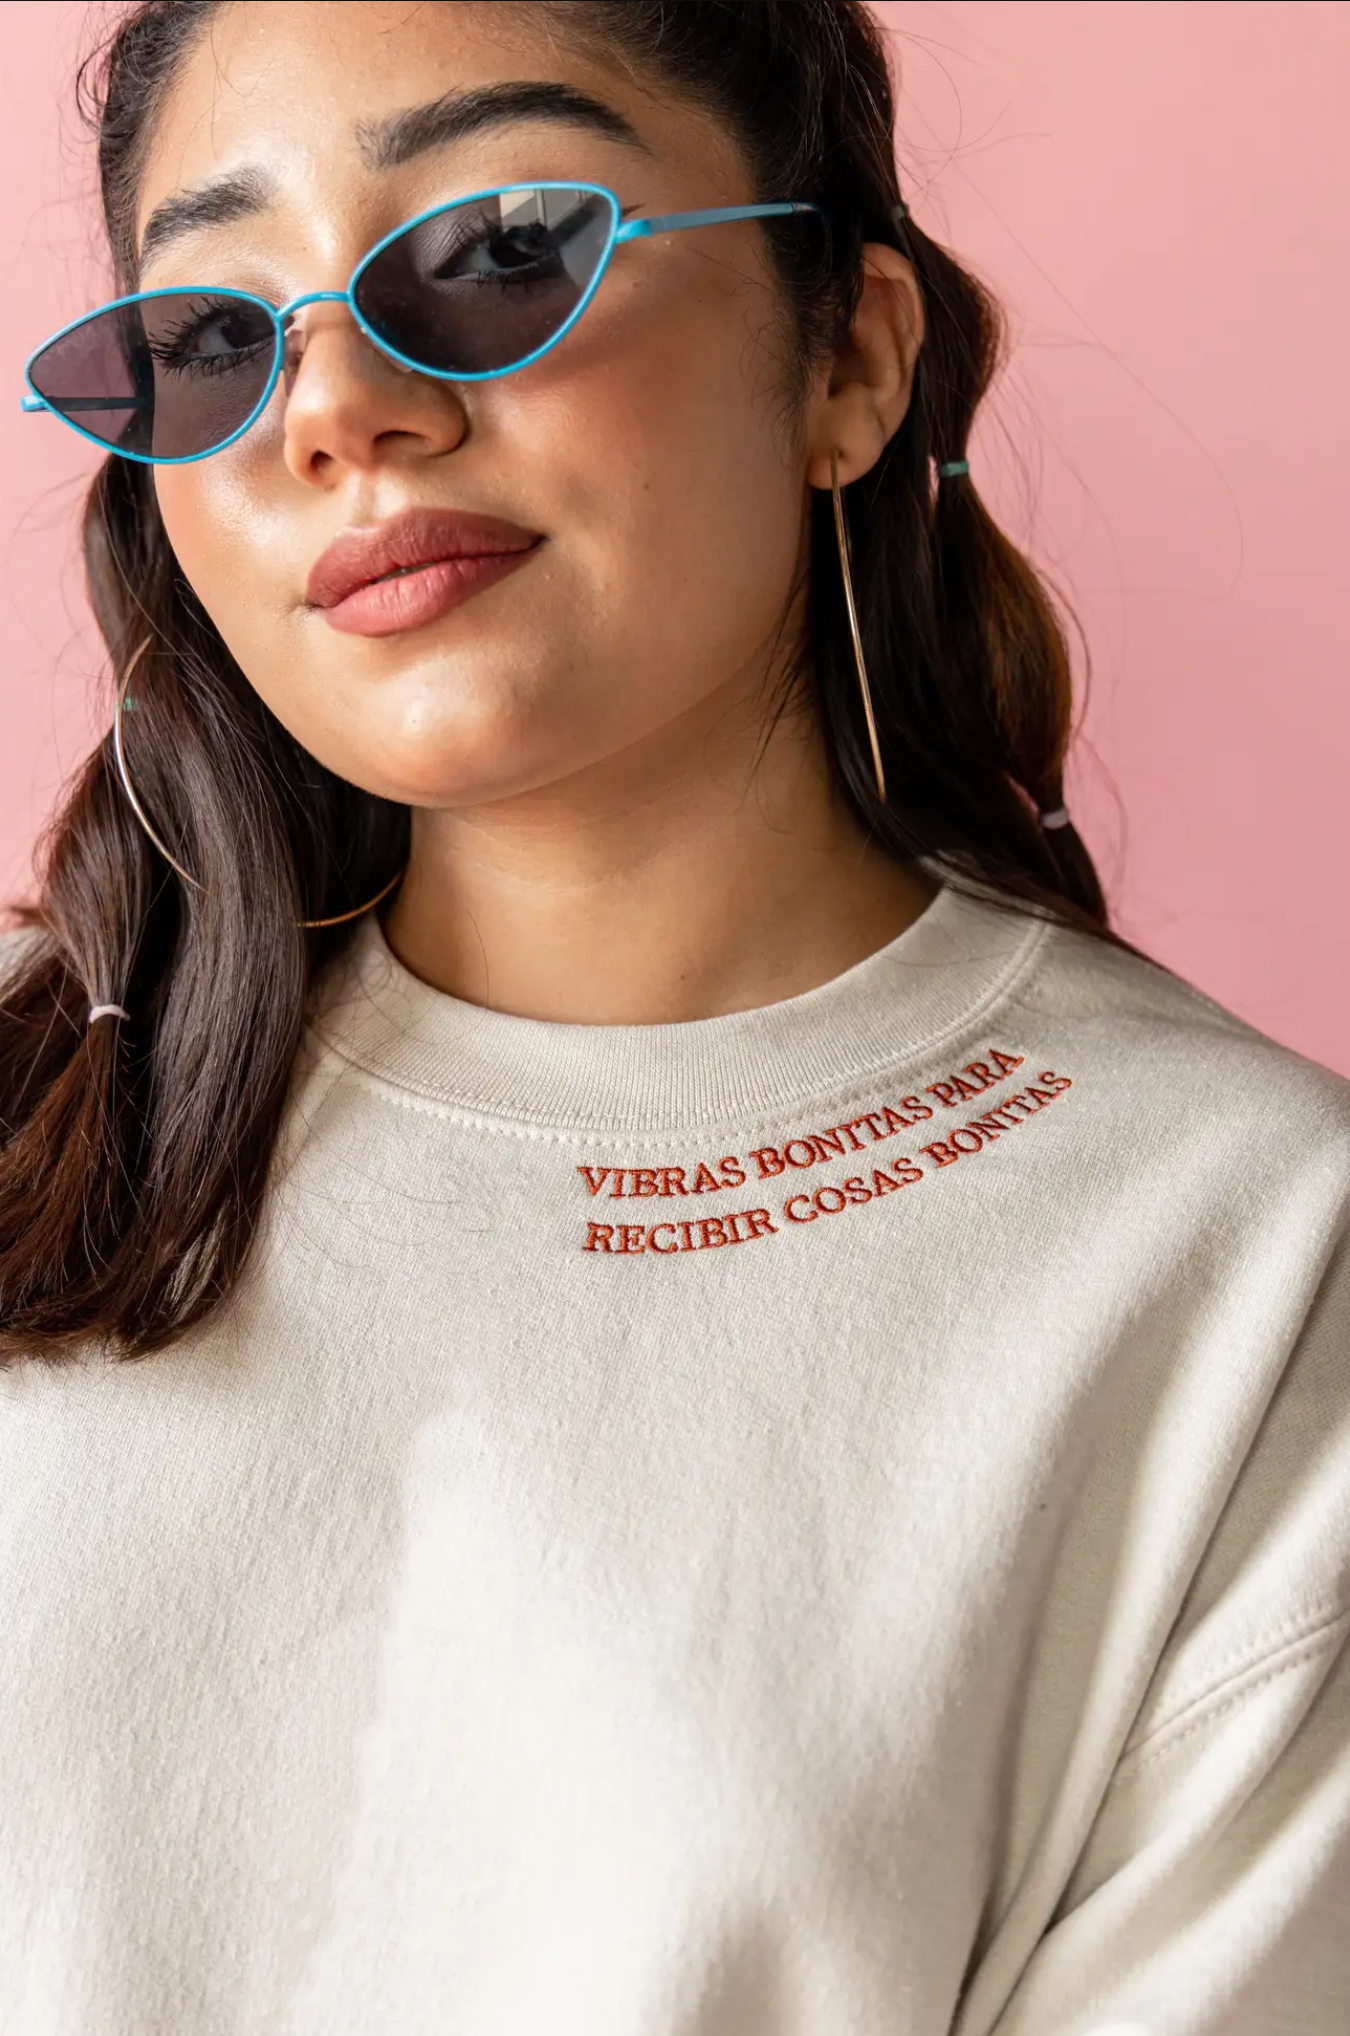 Vibras Bonitas (Beautiful vibes to attract beautiful things) Embroidered Sweatshirt